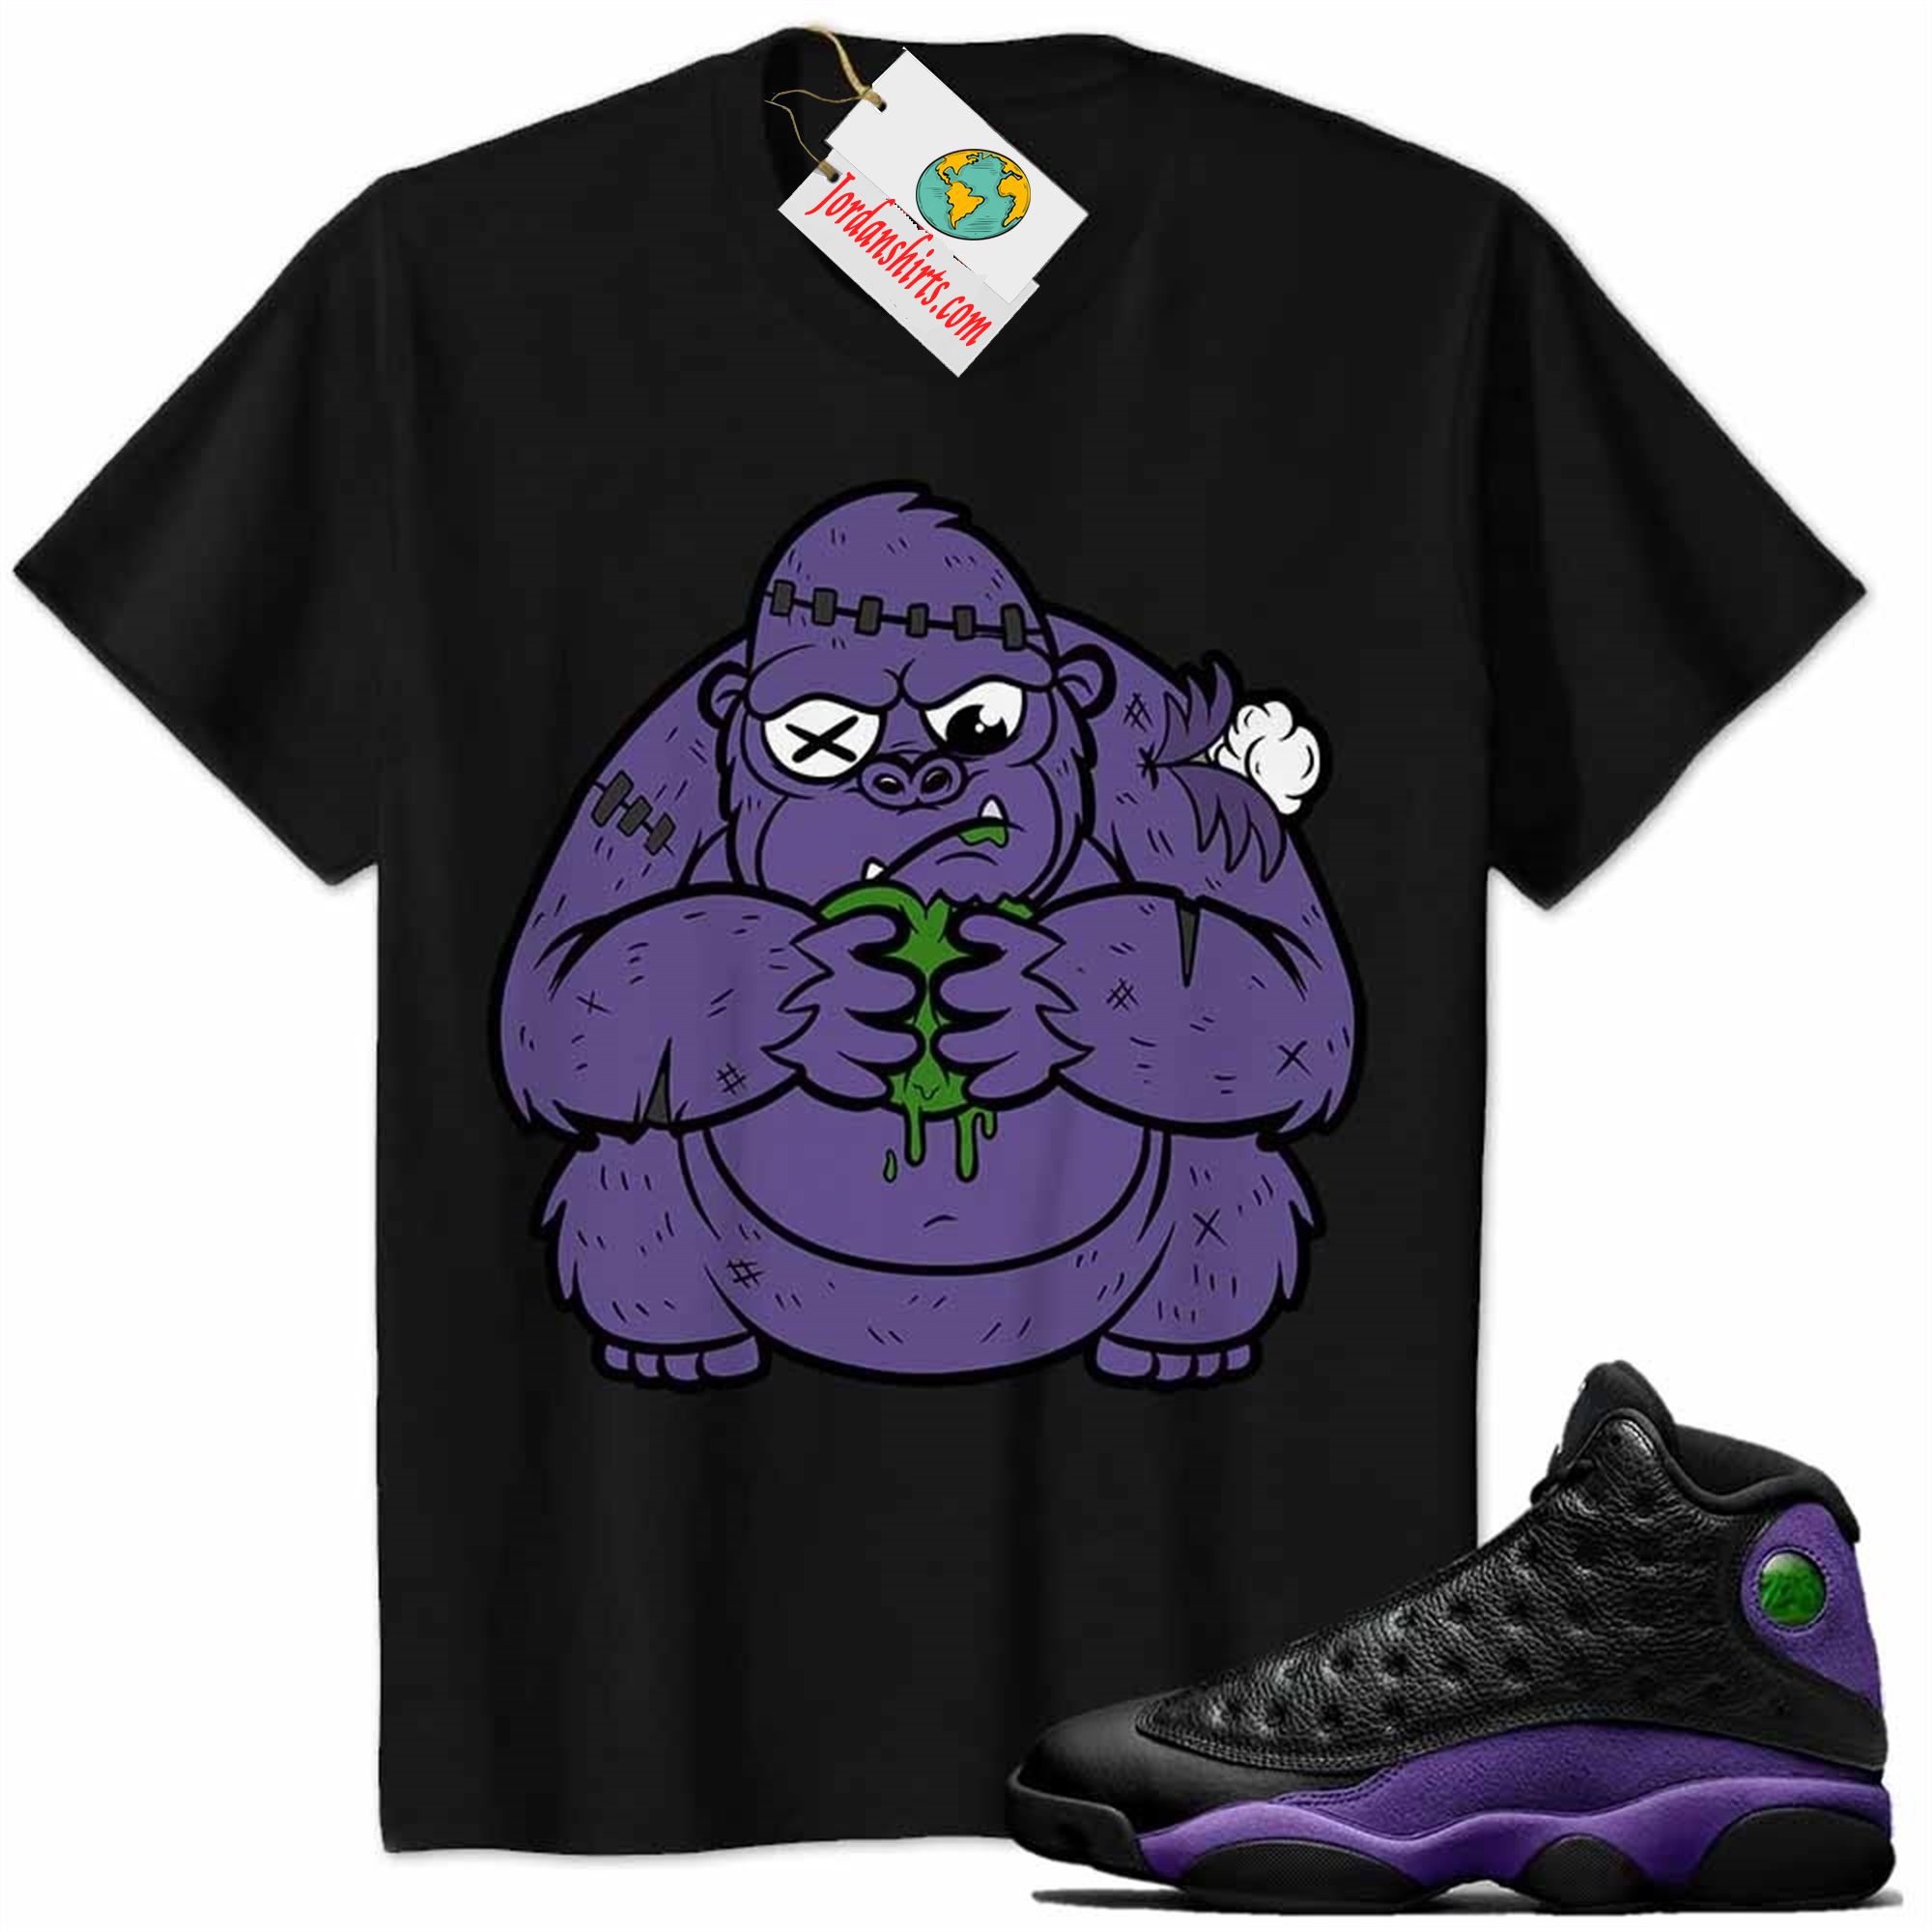 Jordan 13 Shirt, Cute Monkey Broken Heart Black Air Jordan 13 Court Purple 13s Size Up To 5xl